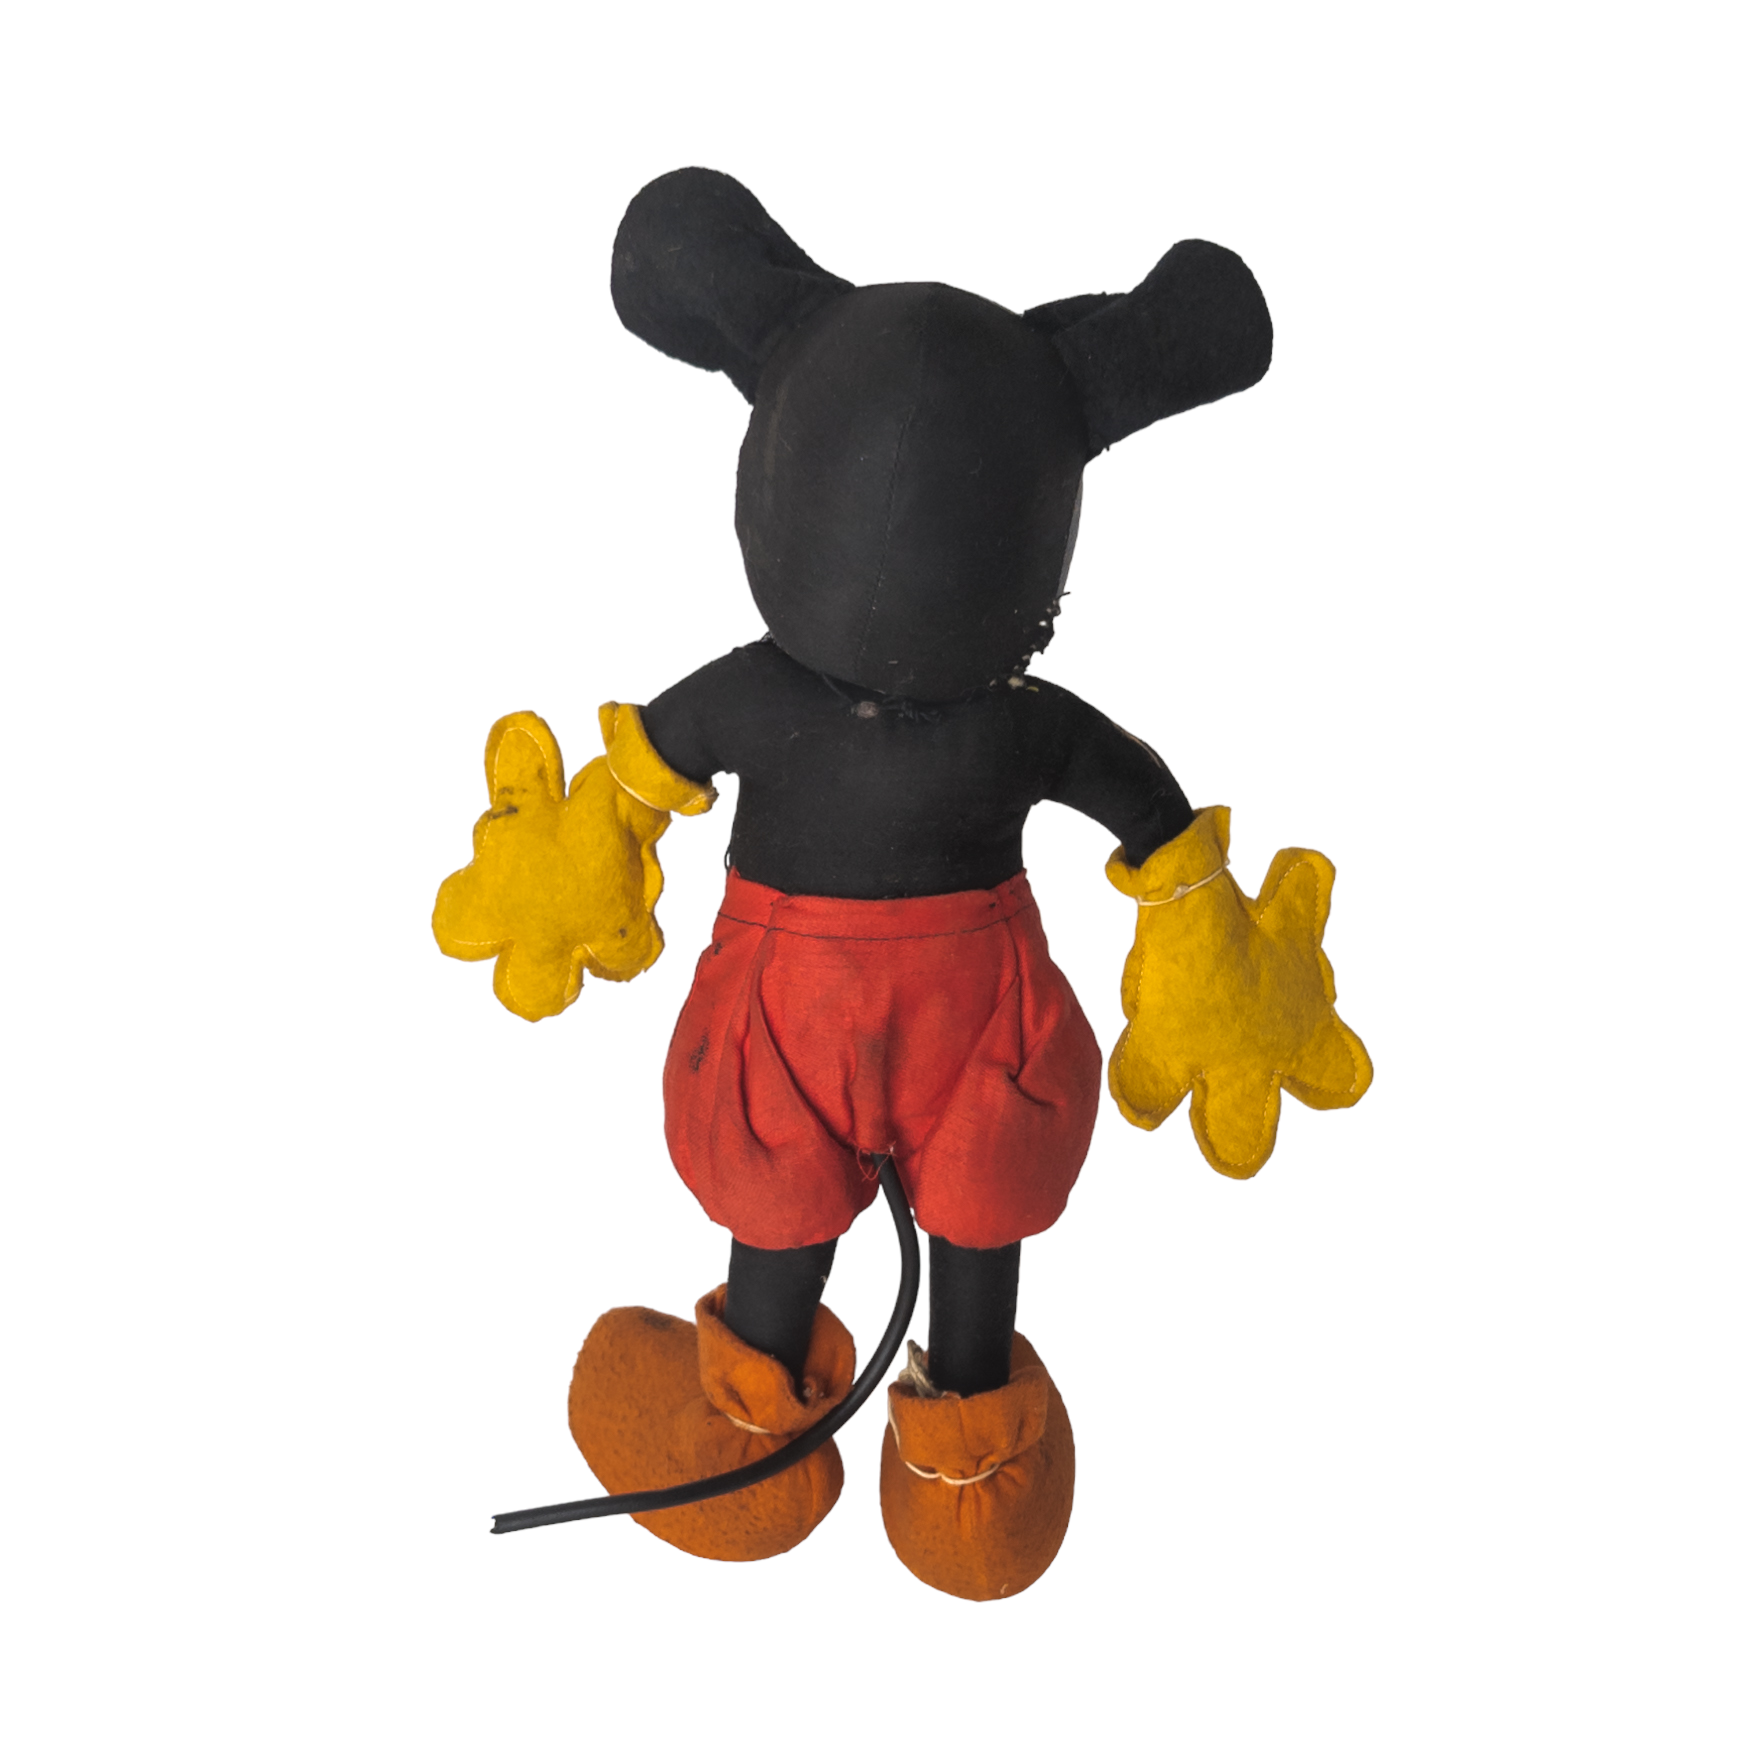 Super Rare 1930s Mickey Mouse Plush Toy